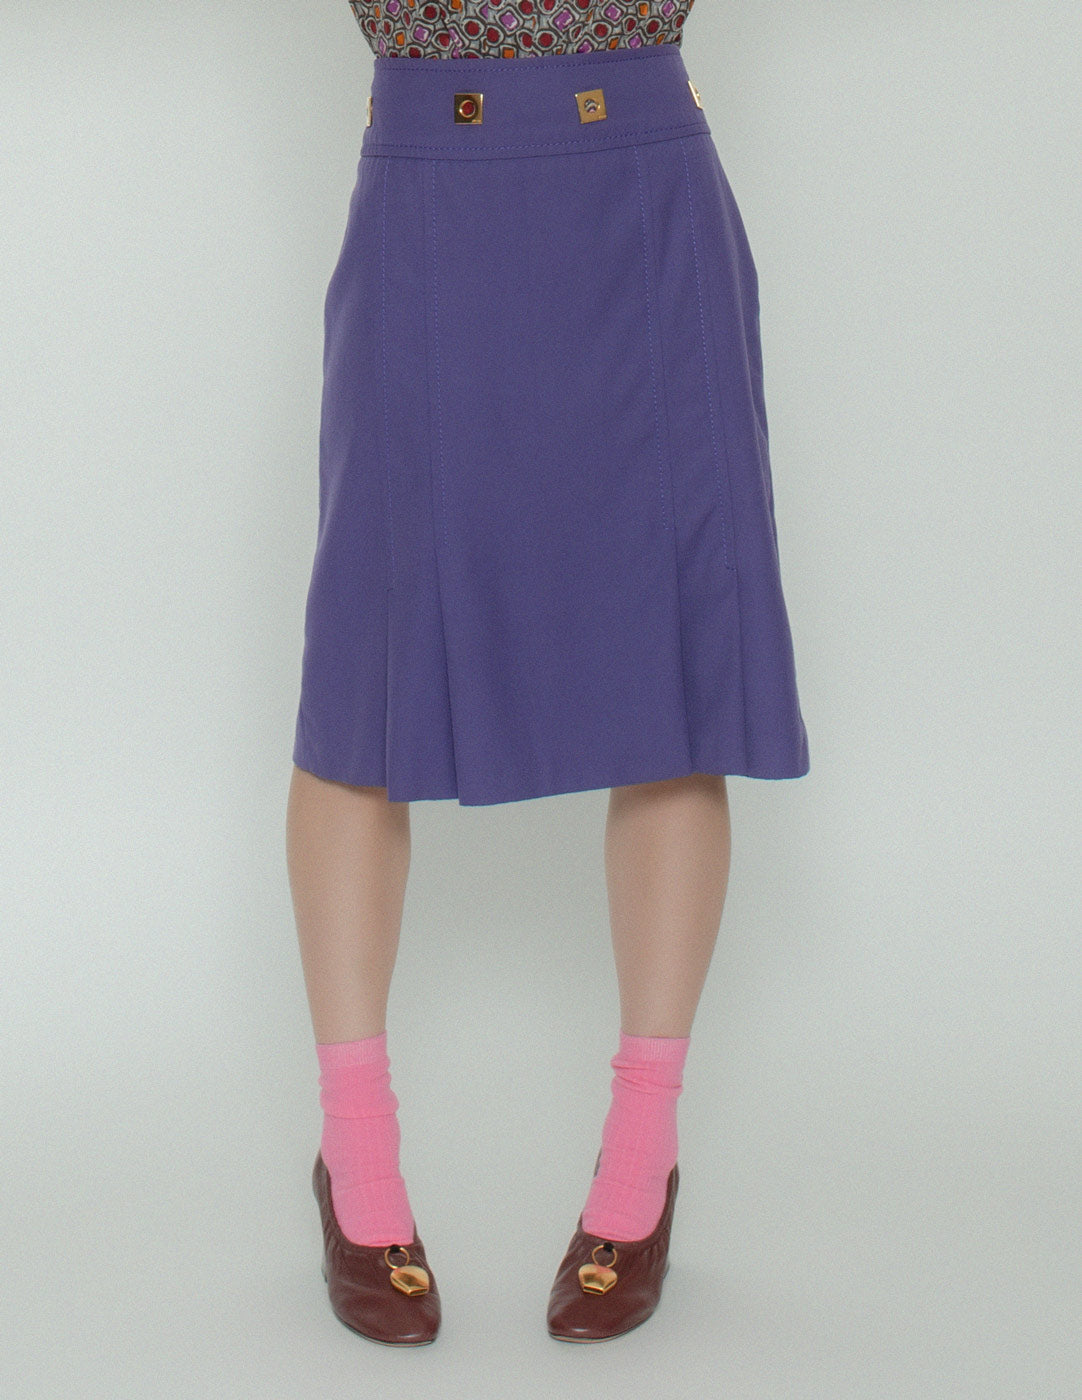 Fendi vintage purple wool skirt front detail